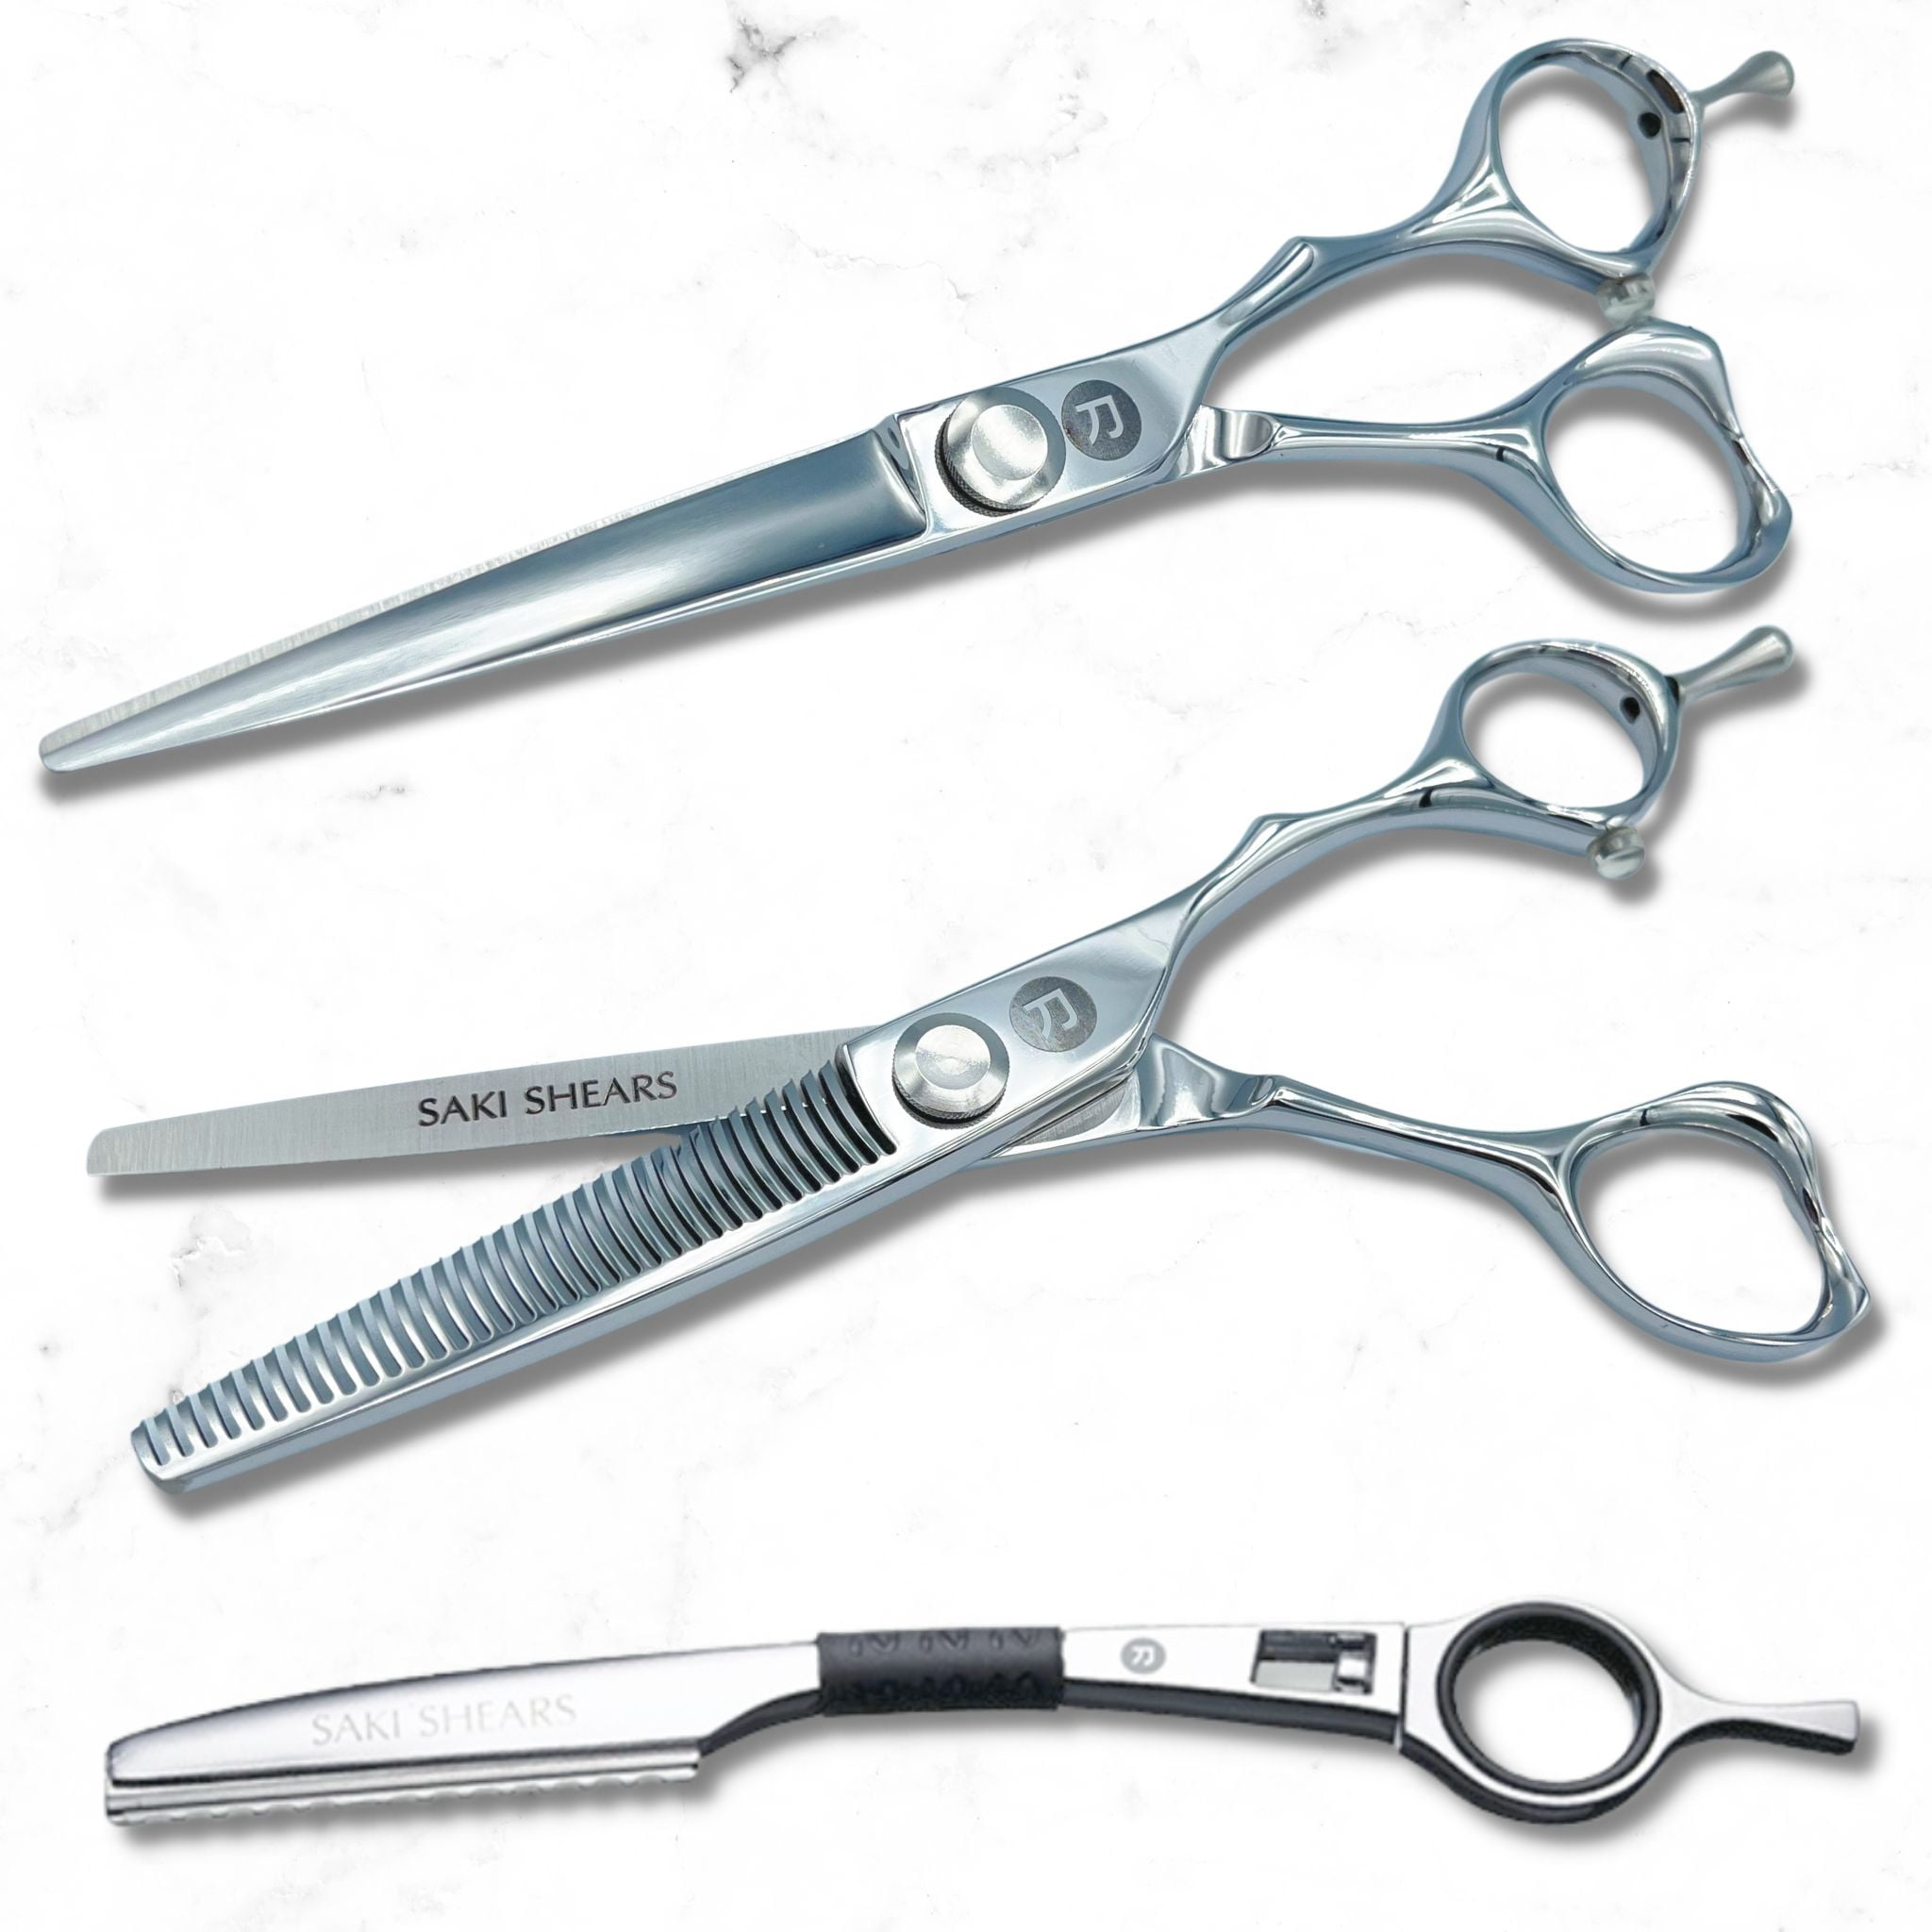 Glexal Facial Small Hair Grooming Beauty Scissors,2pcs 5 inch Comestic  Cutting shears for Men and Women,Hair Trimming,Beard,Nose